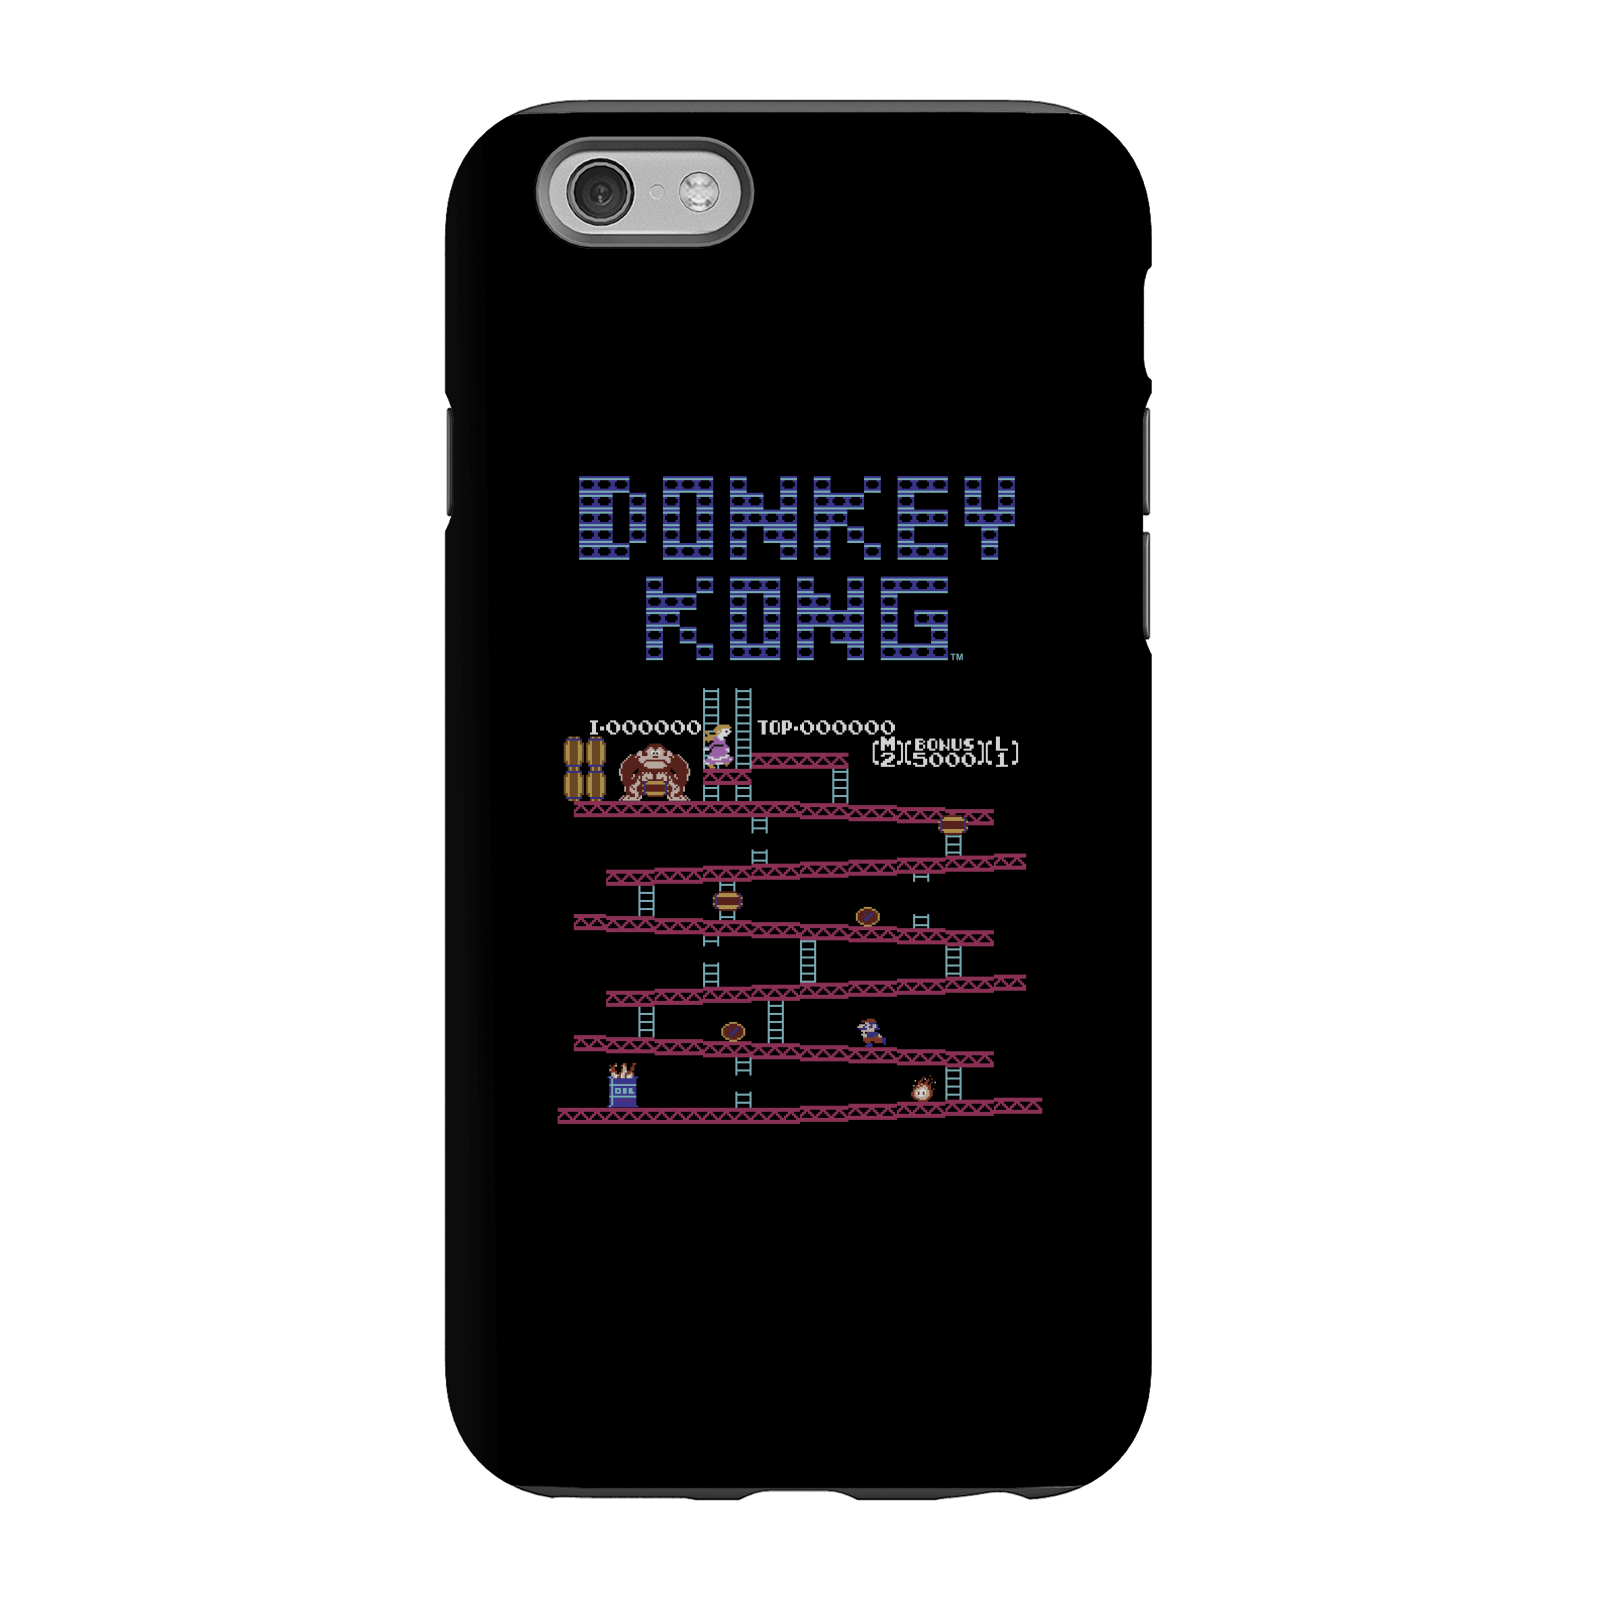 Nintendo Donkey Kong Retro Phone Case - iPhone 6S - Tough Case - Matte